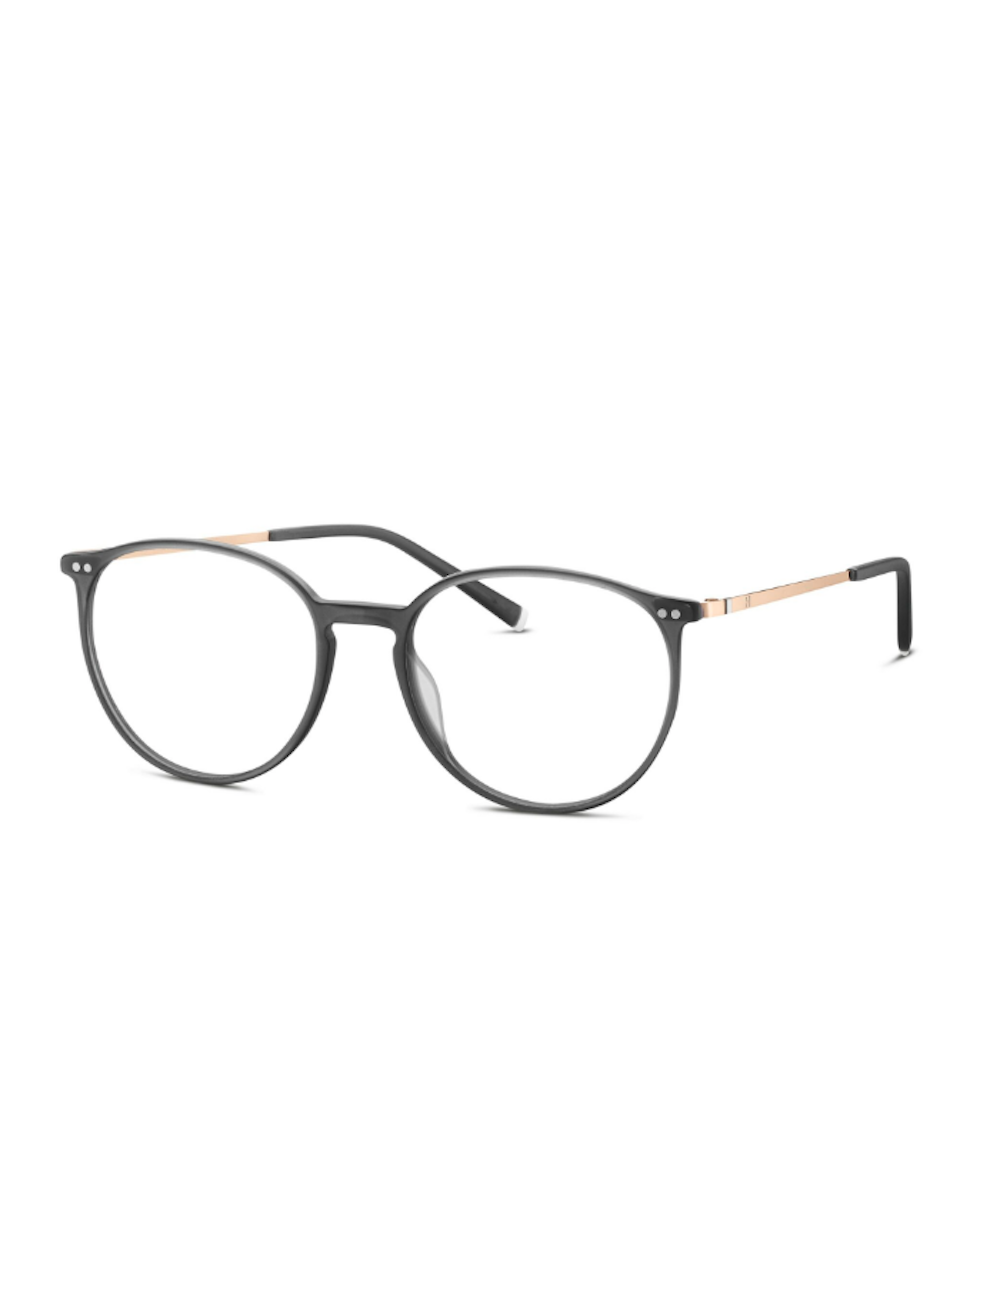 Humphrey's eyewear 581105 30 transparent grey phantos eyeglasses